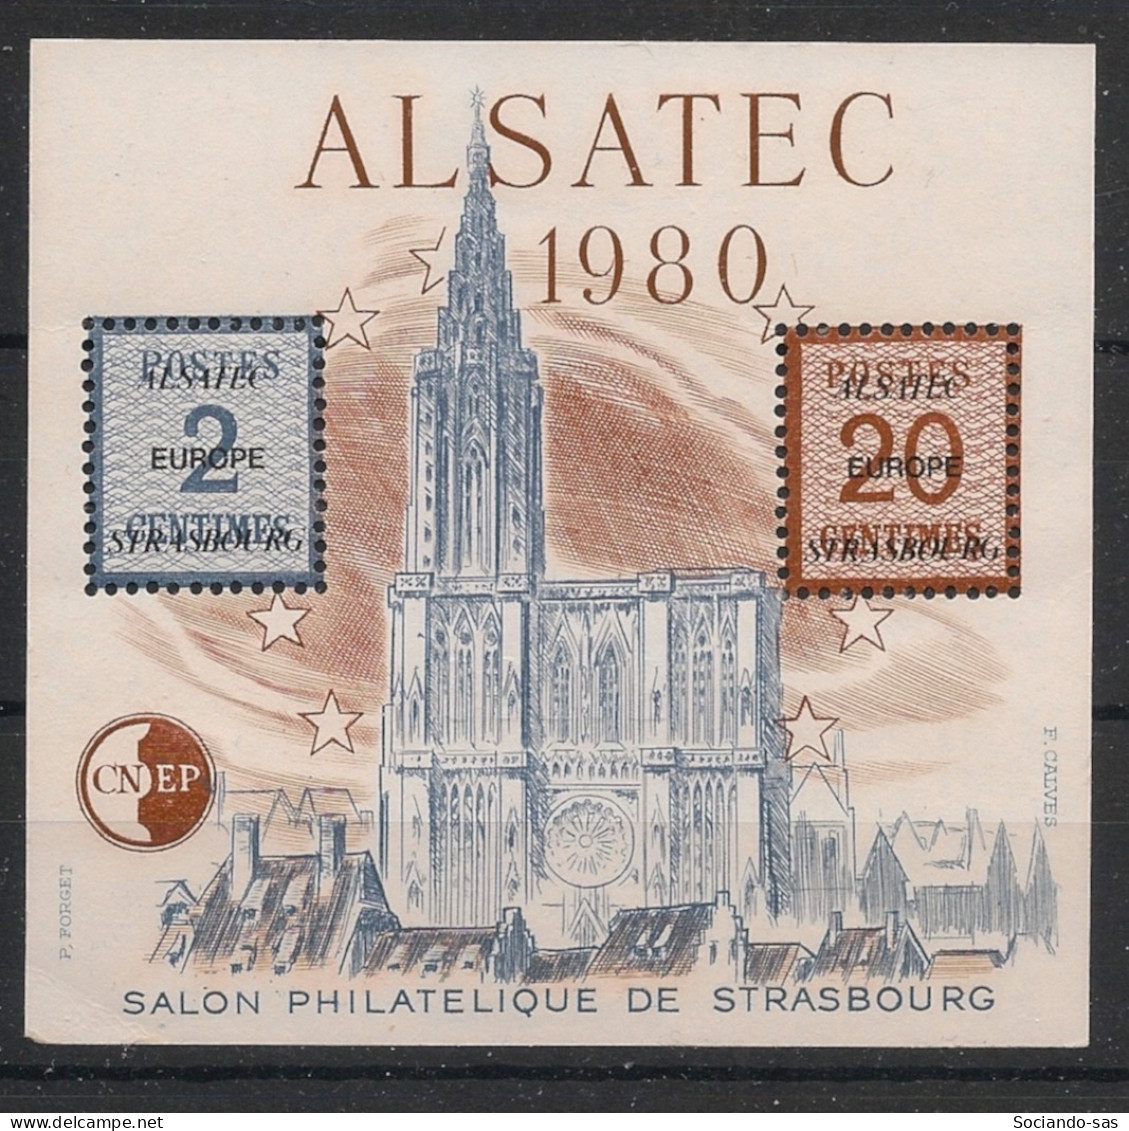 FRANCE - 1980 - Bloc Feuillet CNEP N°YT. 1 - Alsatec - Neuf Luxe ** / MNH / Postfrisch - CNEP